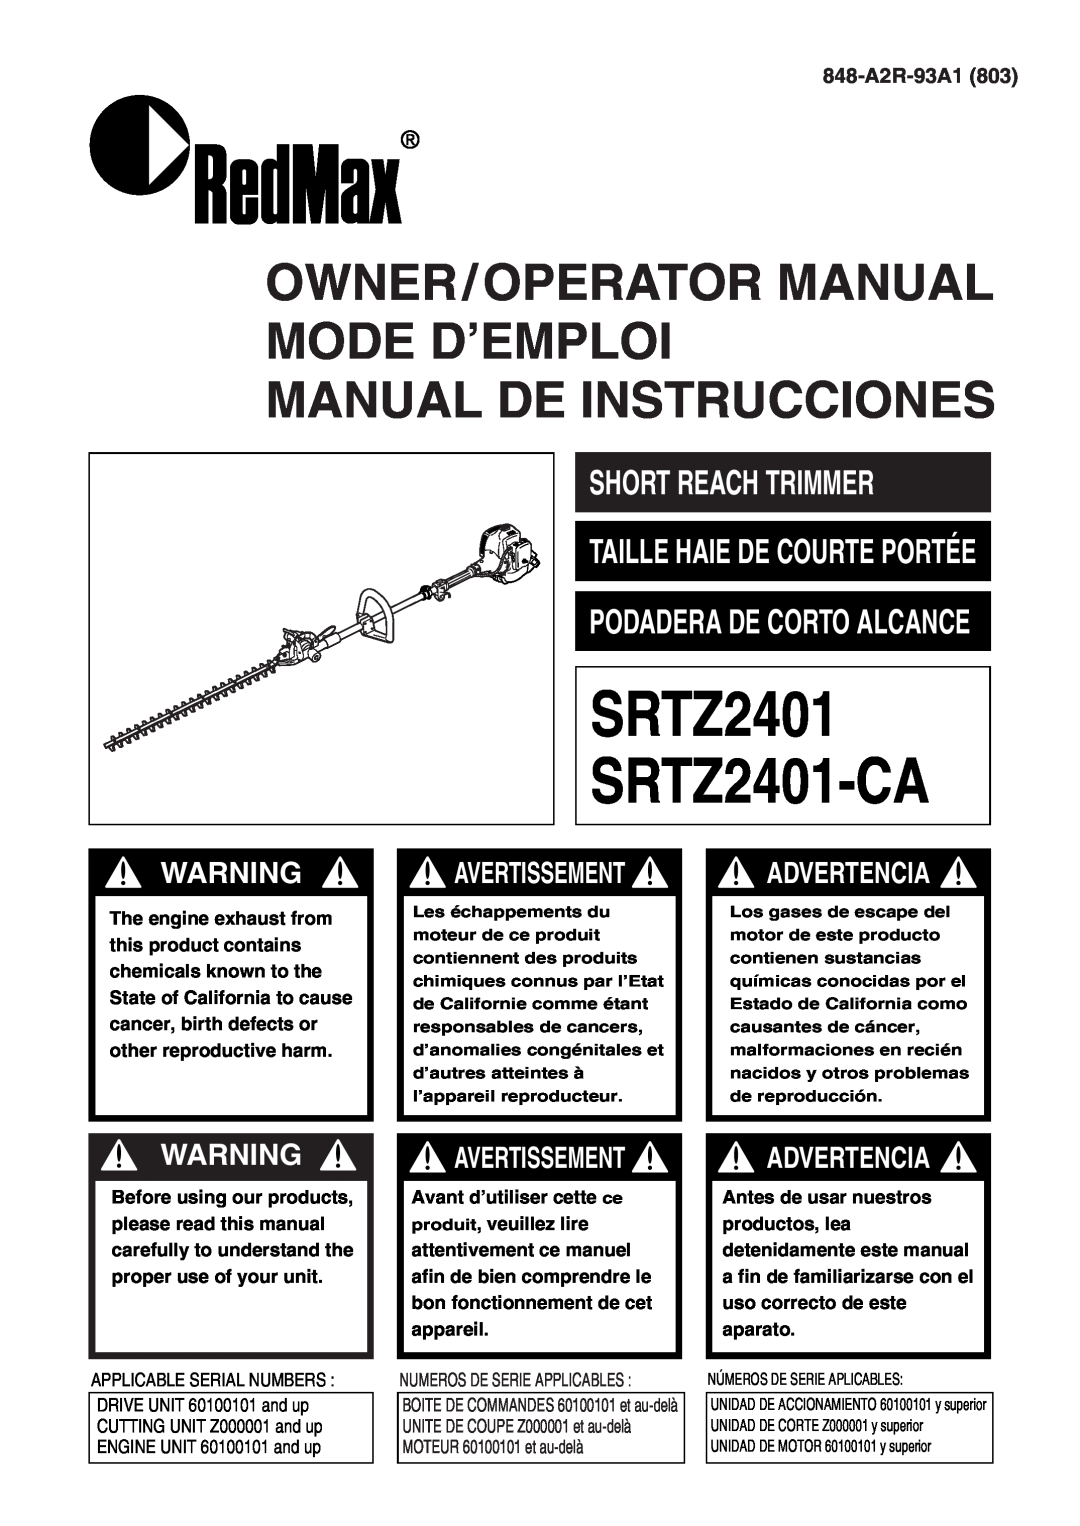 Univex manual Short Reach Trimmer, Avertissement, SRTZ2401 SRTZ2401-CA, Owner/Operator Manual Mode D’Emploi 